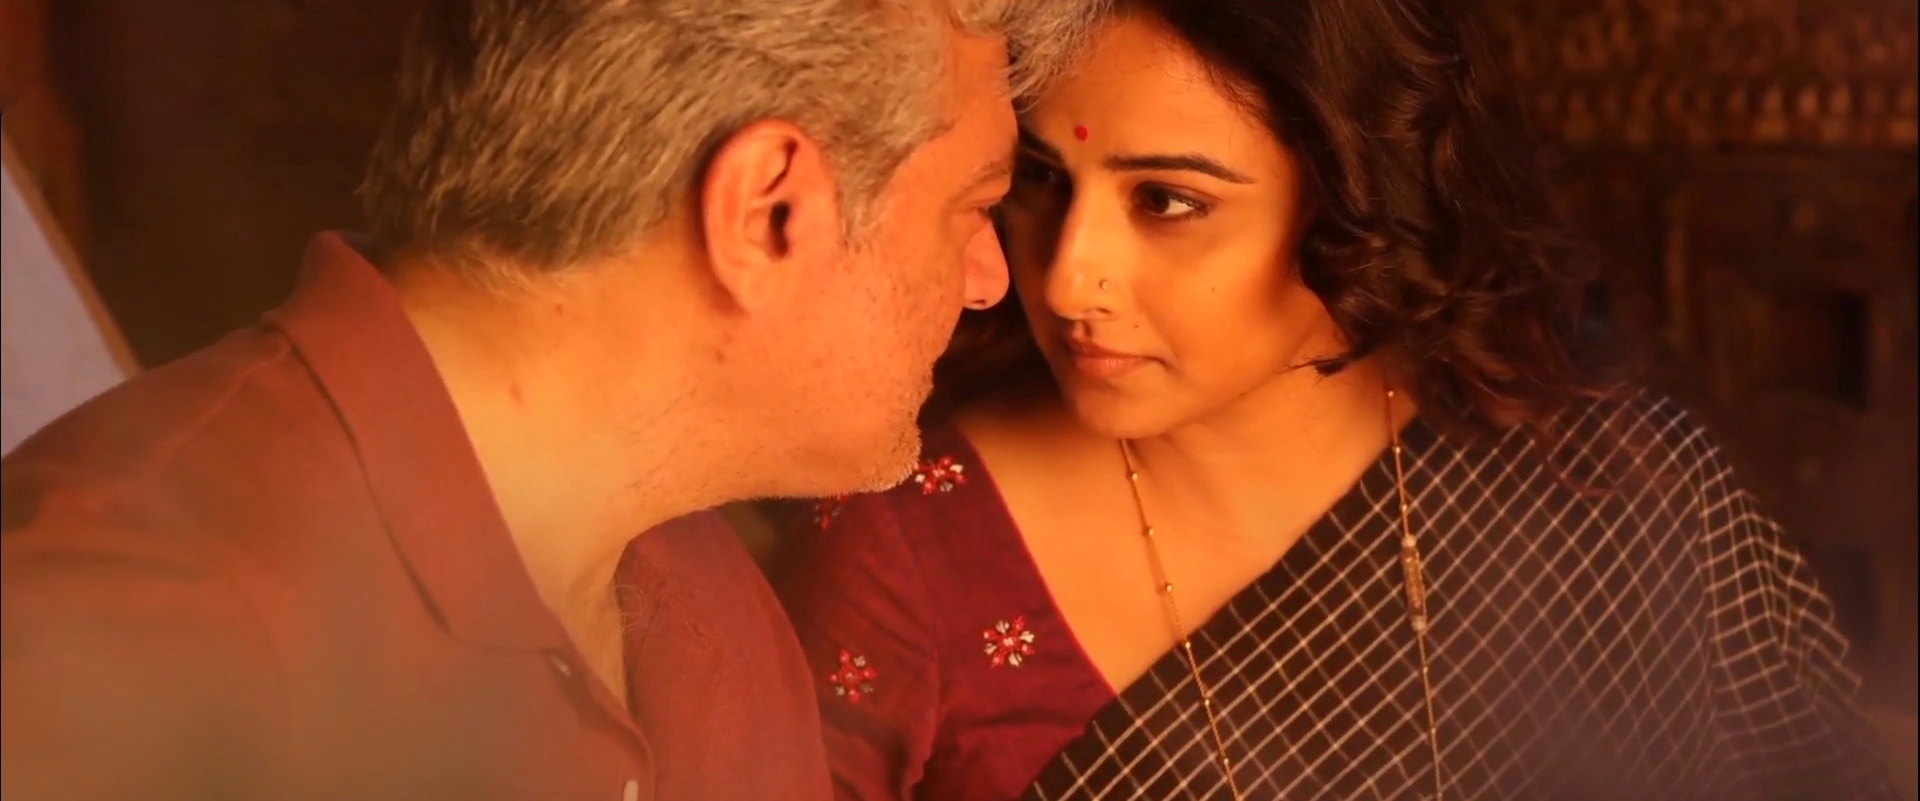 Thala Ajith And Vidhya Balan Romantic Stills From Nerkonda Paarvai Set 2